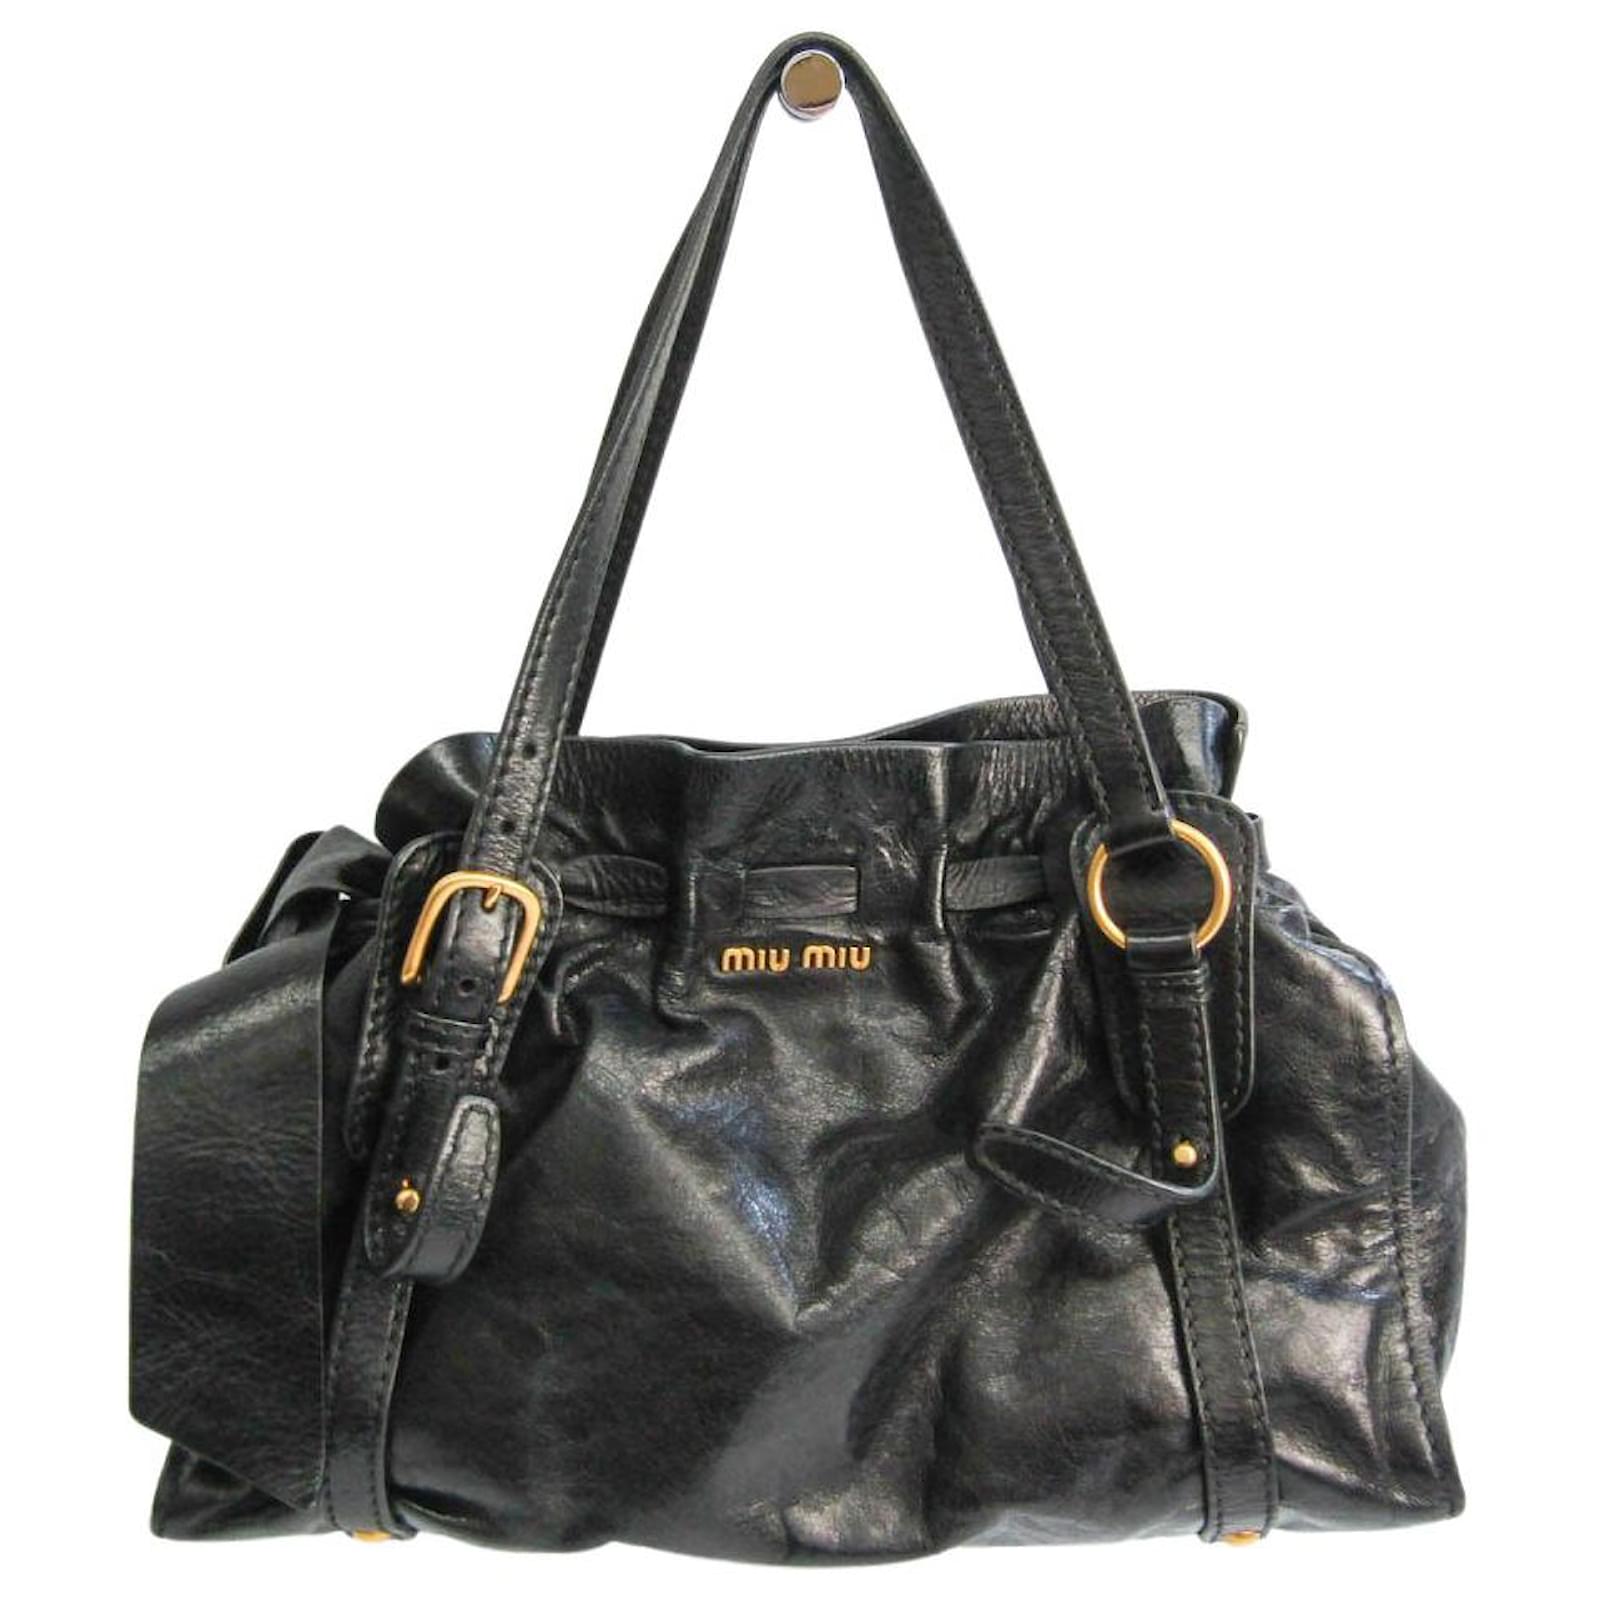 Bow bag leather tote Miu Miu Black in Leather - 18532345